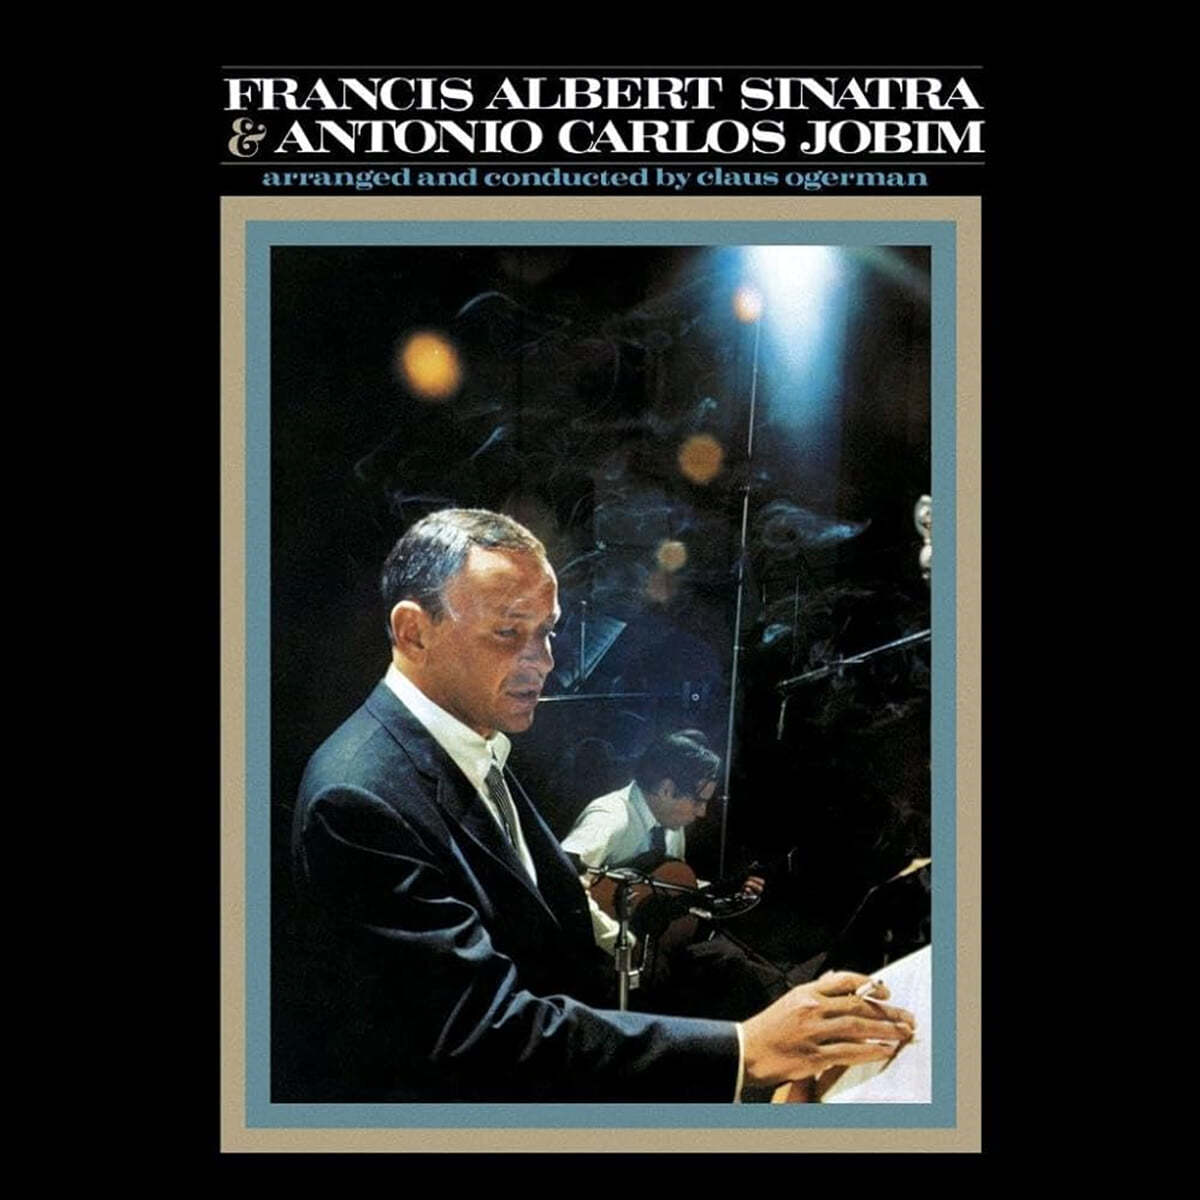 Frank Sinatra / Antonio Carlos Jobim - Sinatra &amp; Jobim 